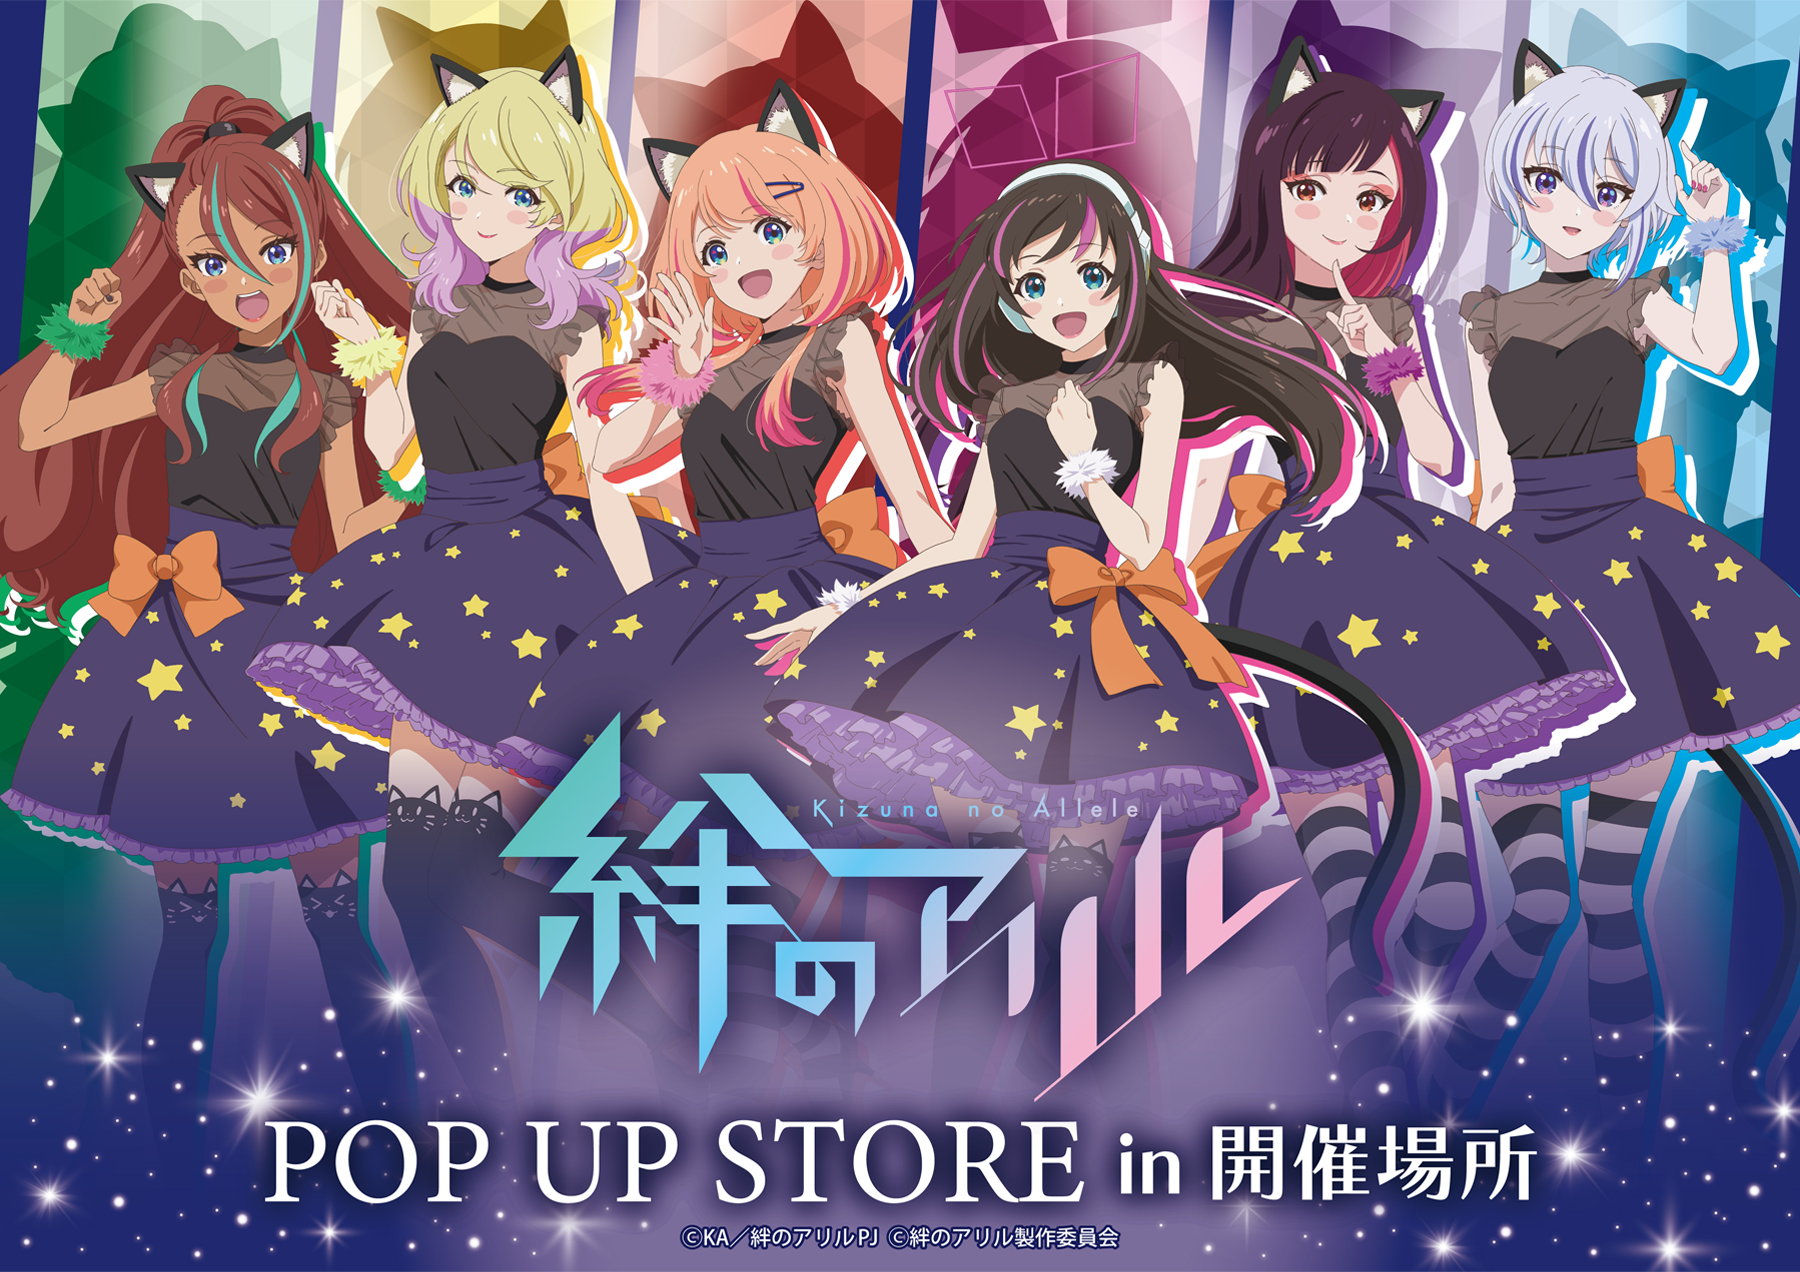 TVアニメ「絆のアリル」POP UP STOREが、GiGO・ハンズ・ 東京キャラクターストリートの5店舗で開催決定！